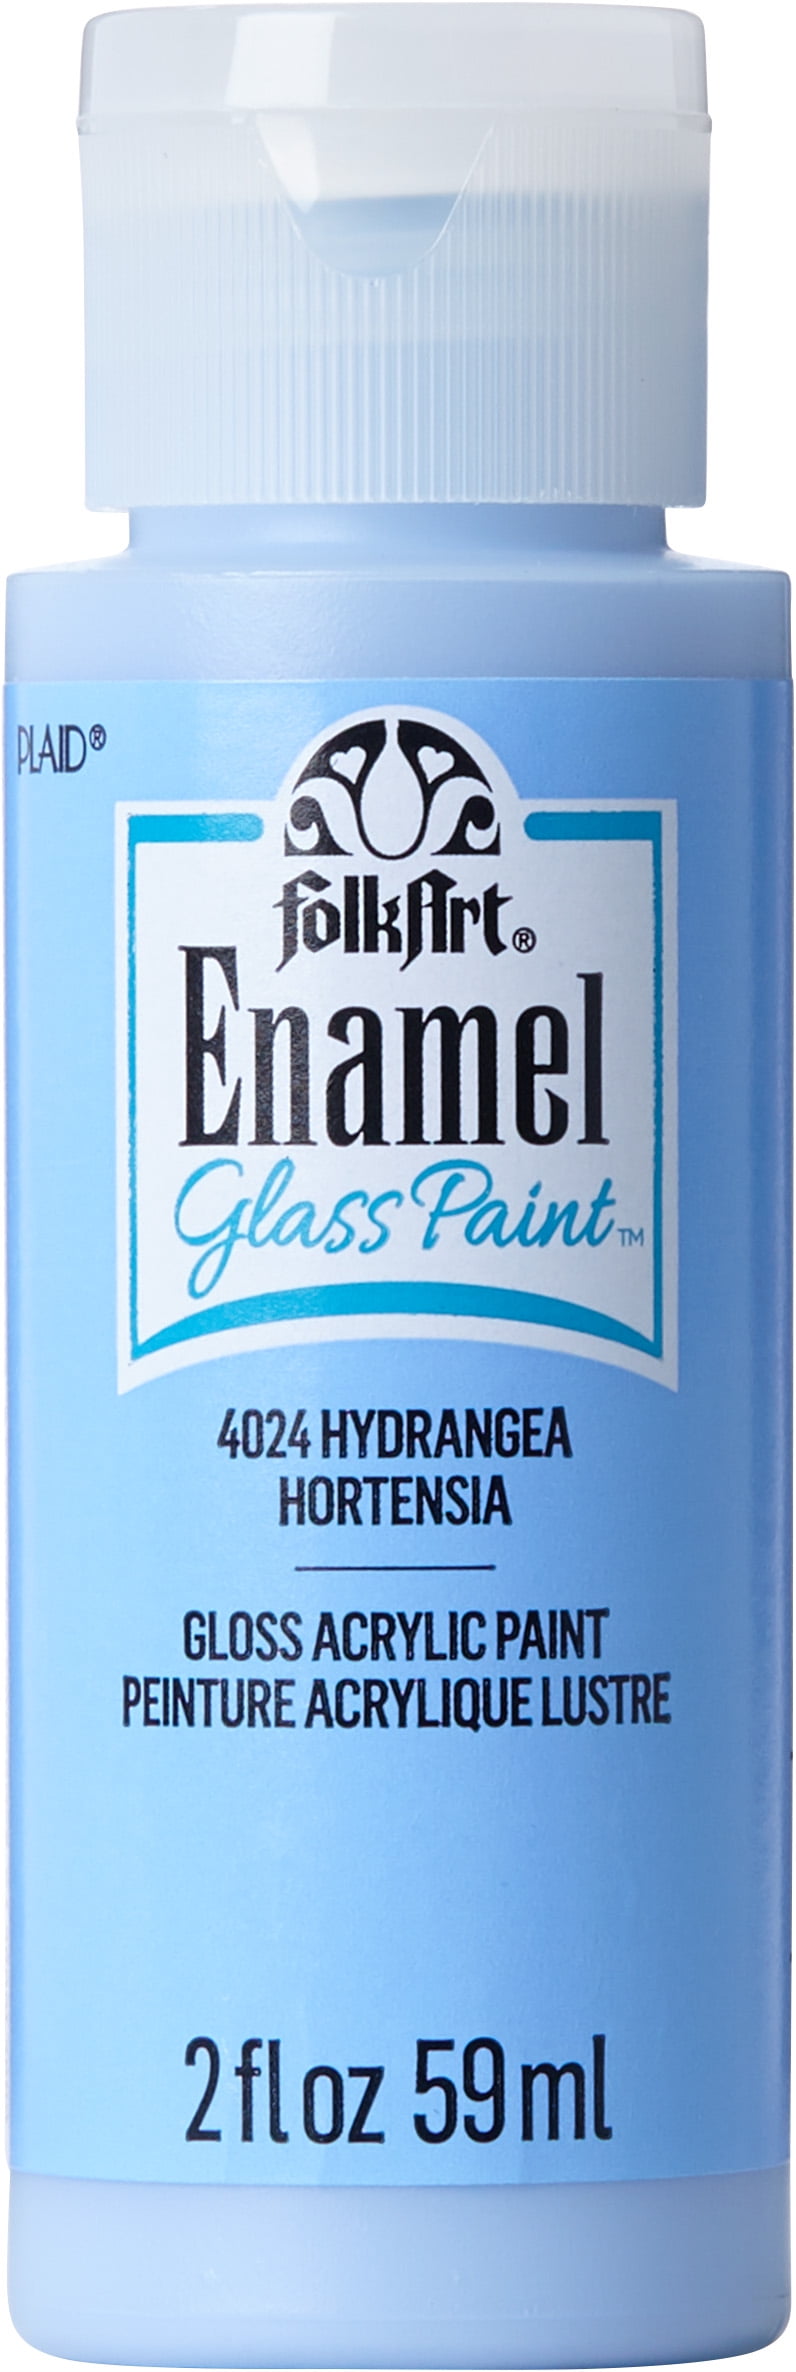 FolkArt Enamel Glass Paint FAQ - Brand - DIY Craft Supplies